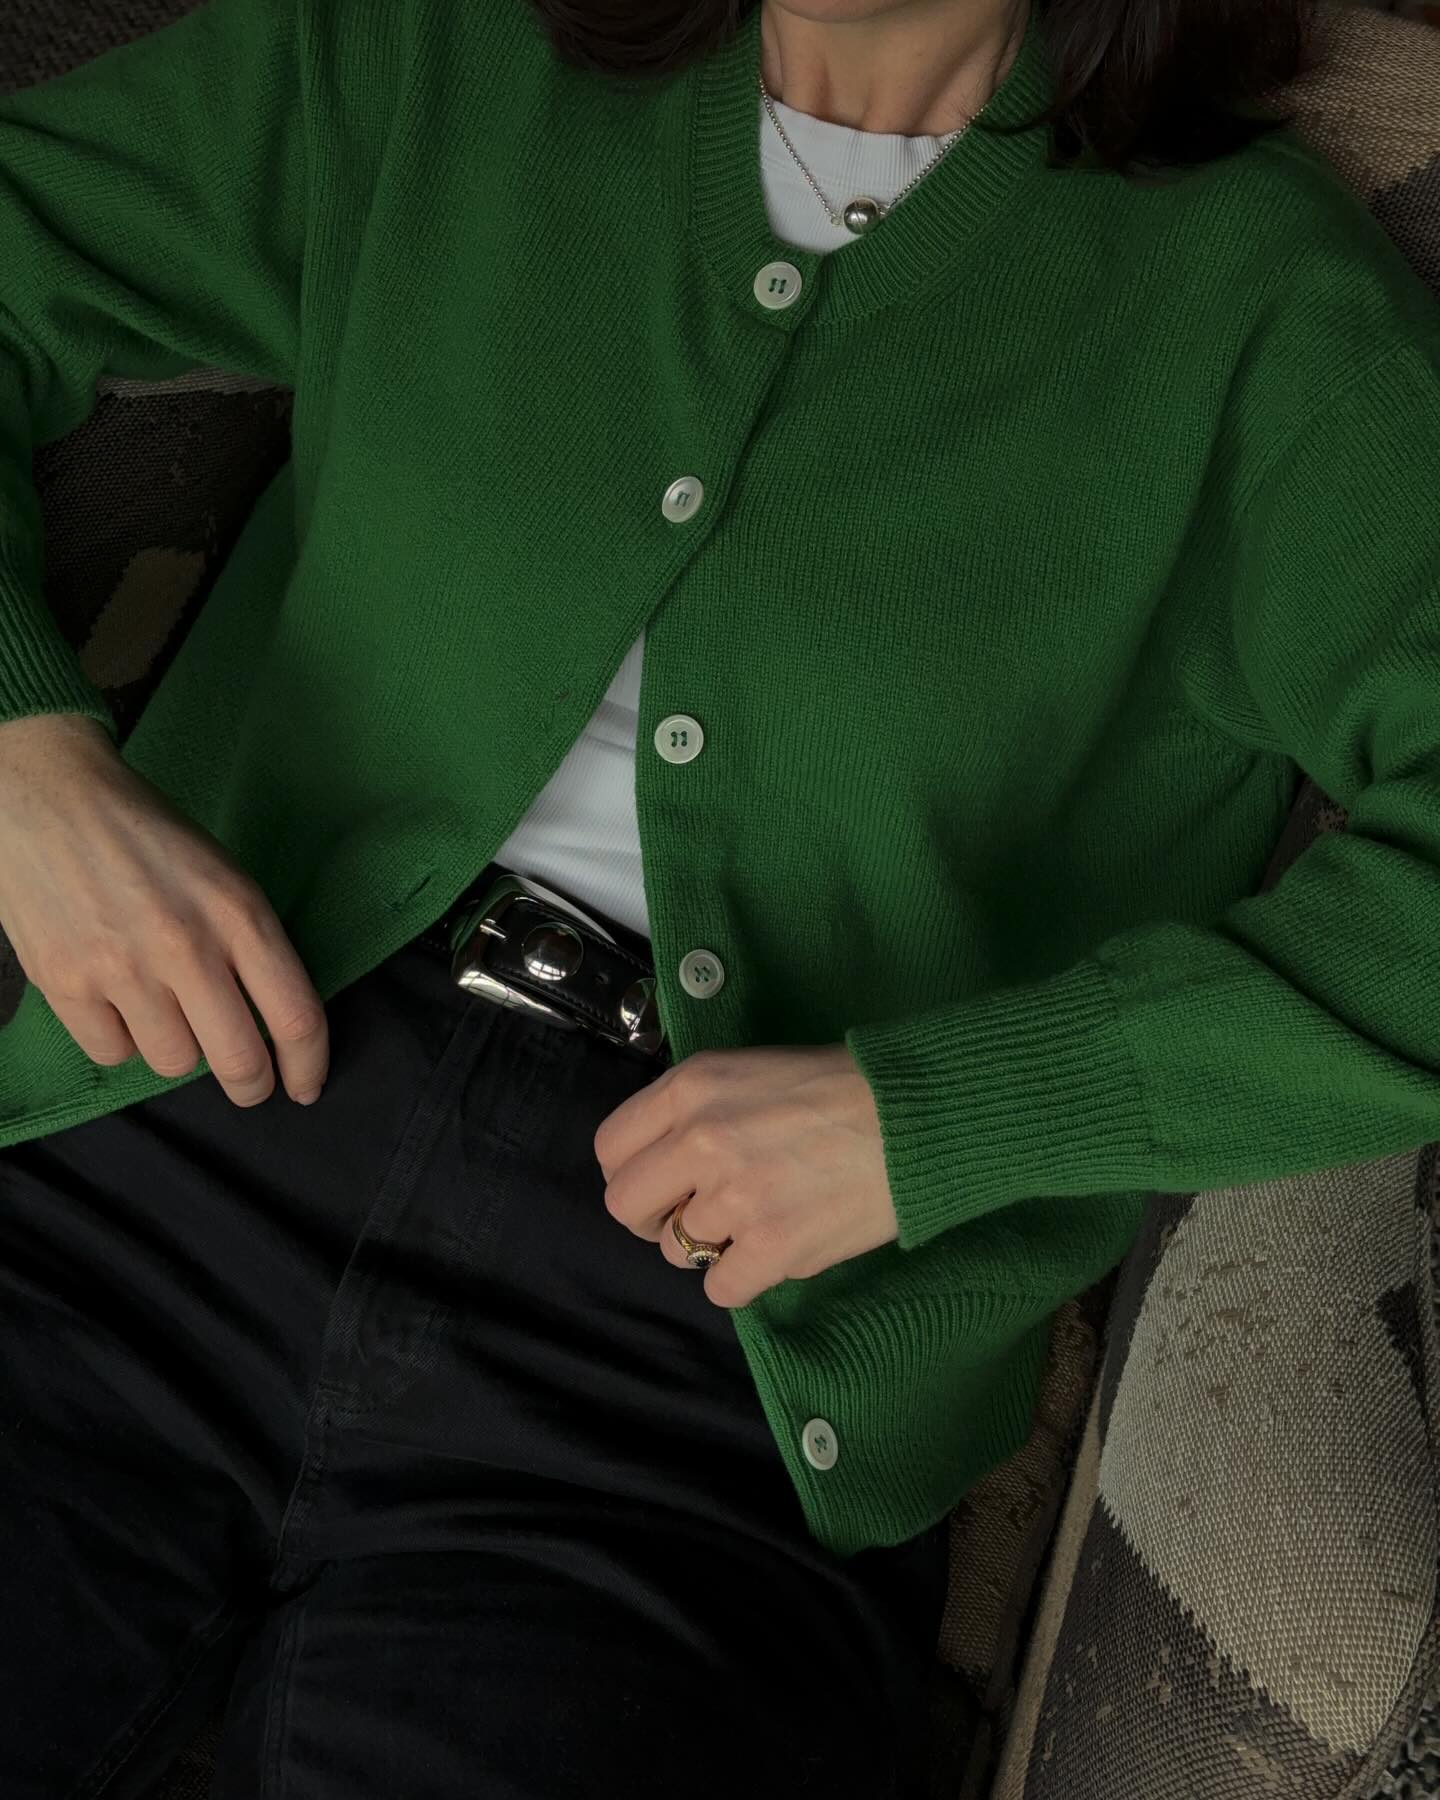 Influencer styles &Daughter's green Ada Geelong cardigan.